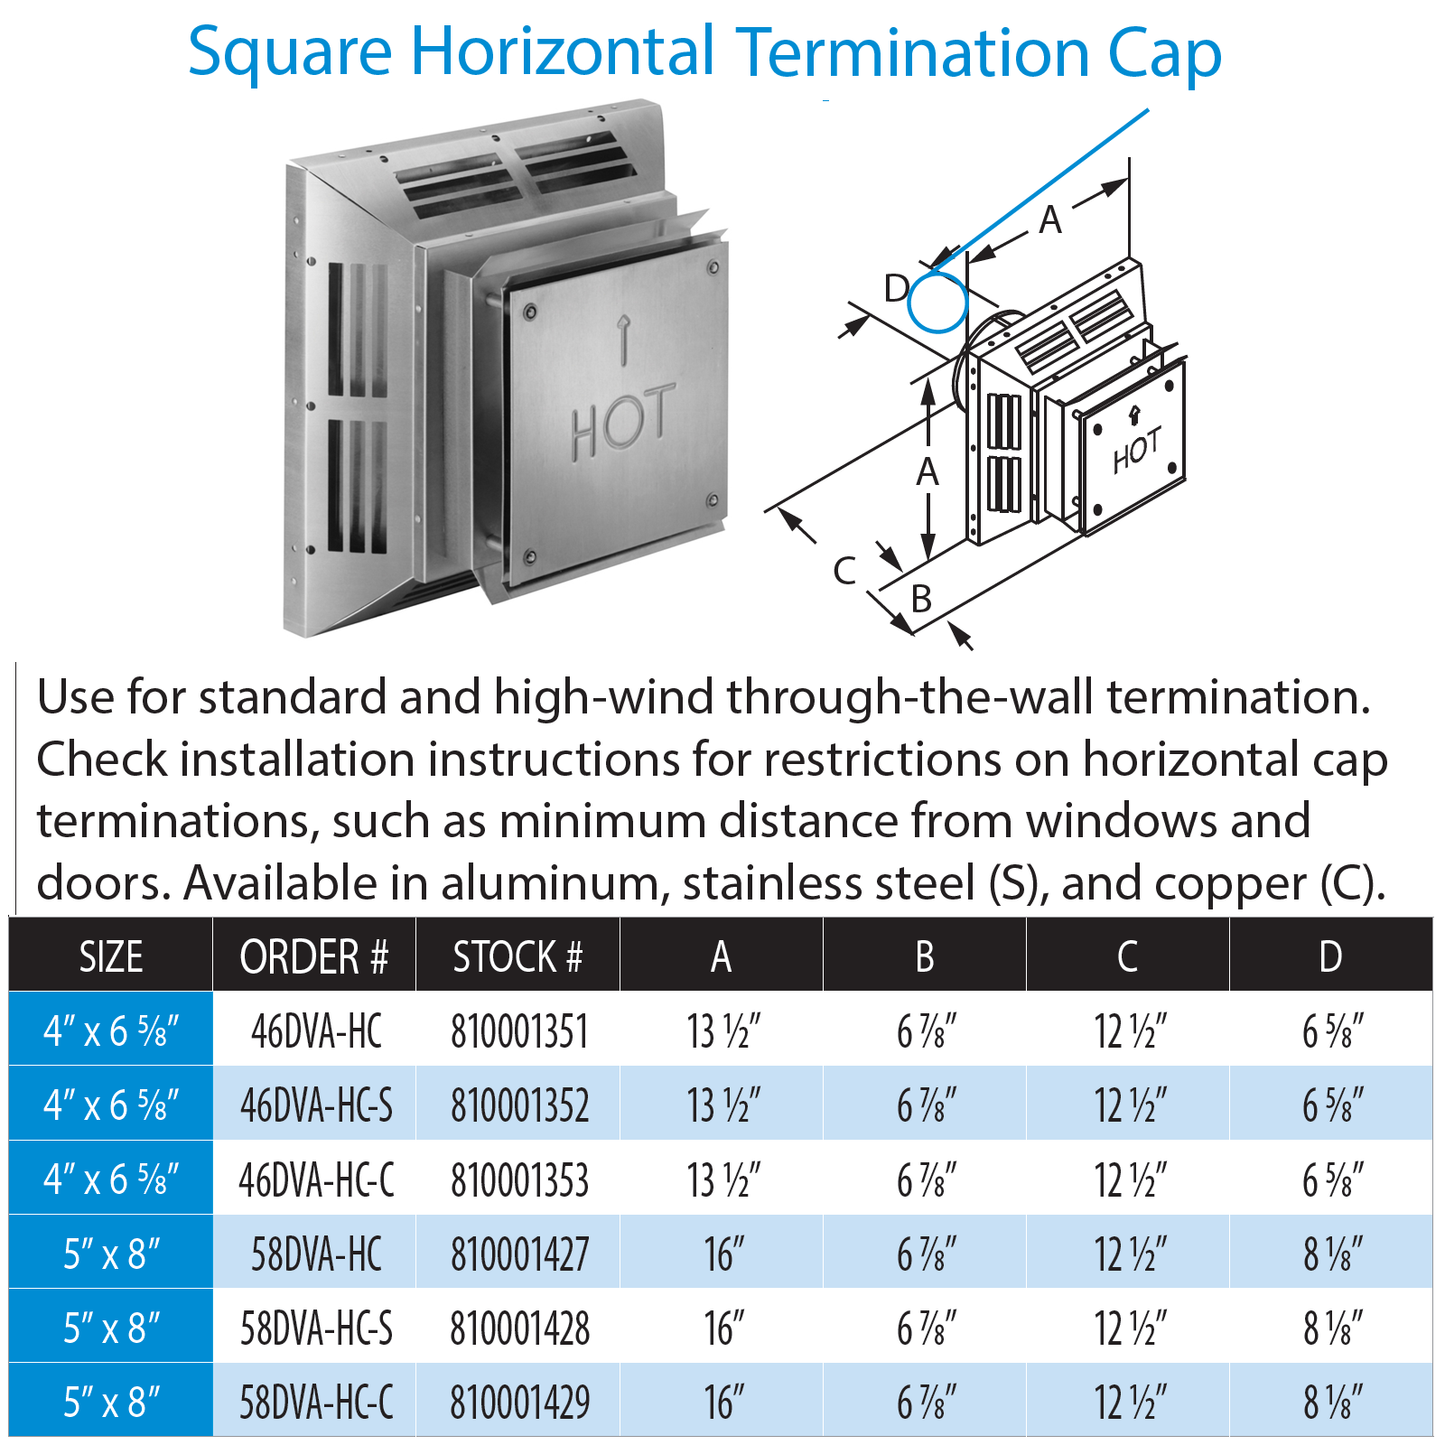 DuraVent DVP Square Horizontal Termination Cap SS | 46DVA-HC-S